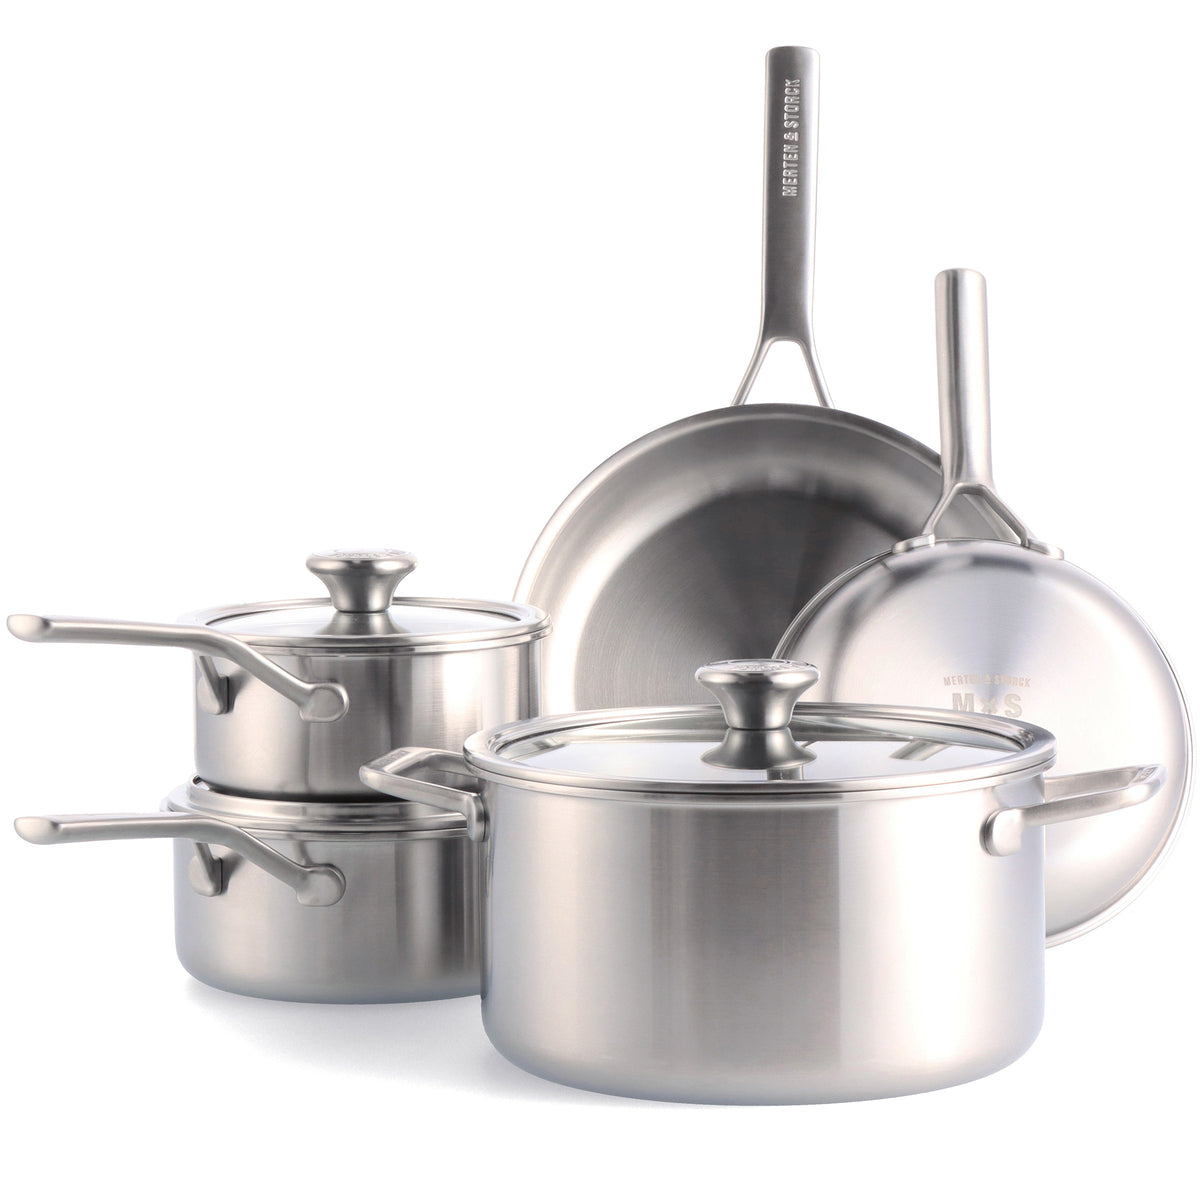 Merten & Storck Stainless Steel 8-Piece Cookware Set - Stainless Steel